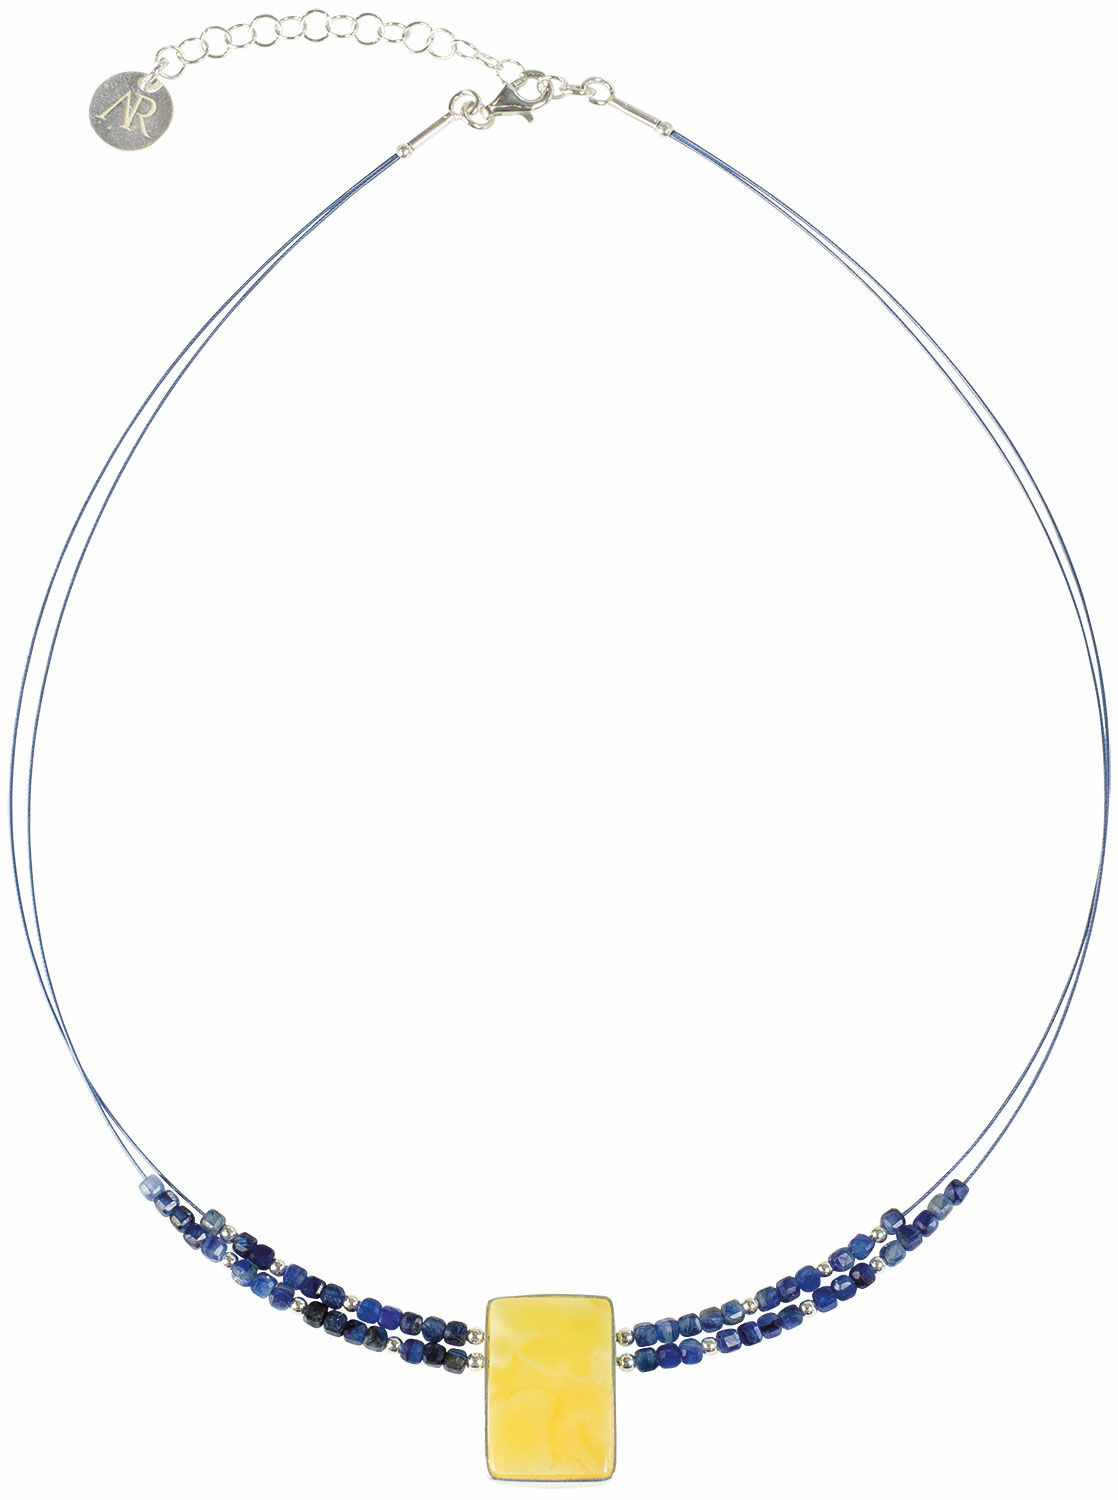 Amber necklace "Dorabella"